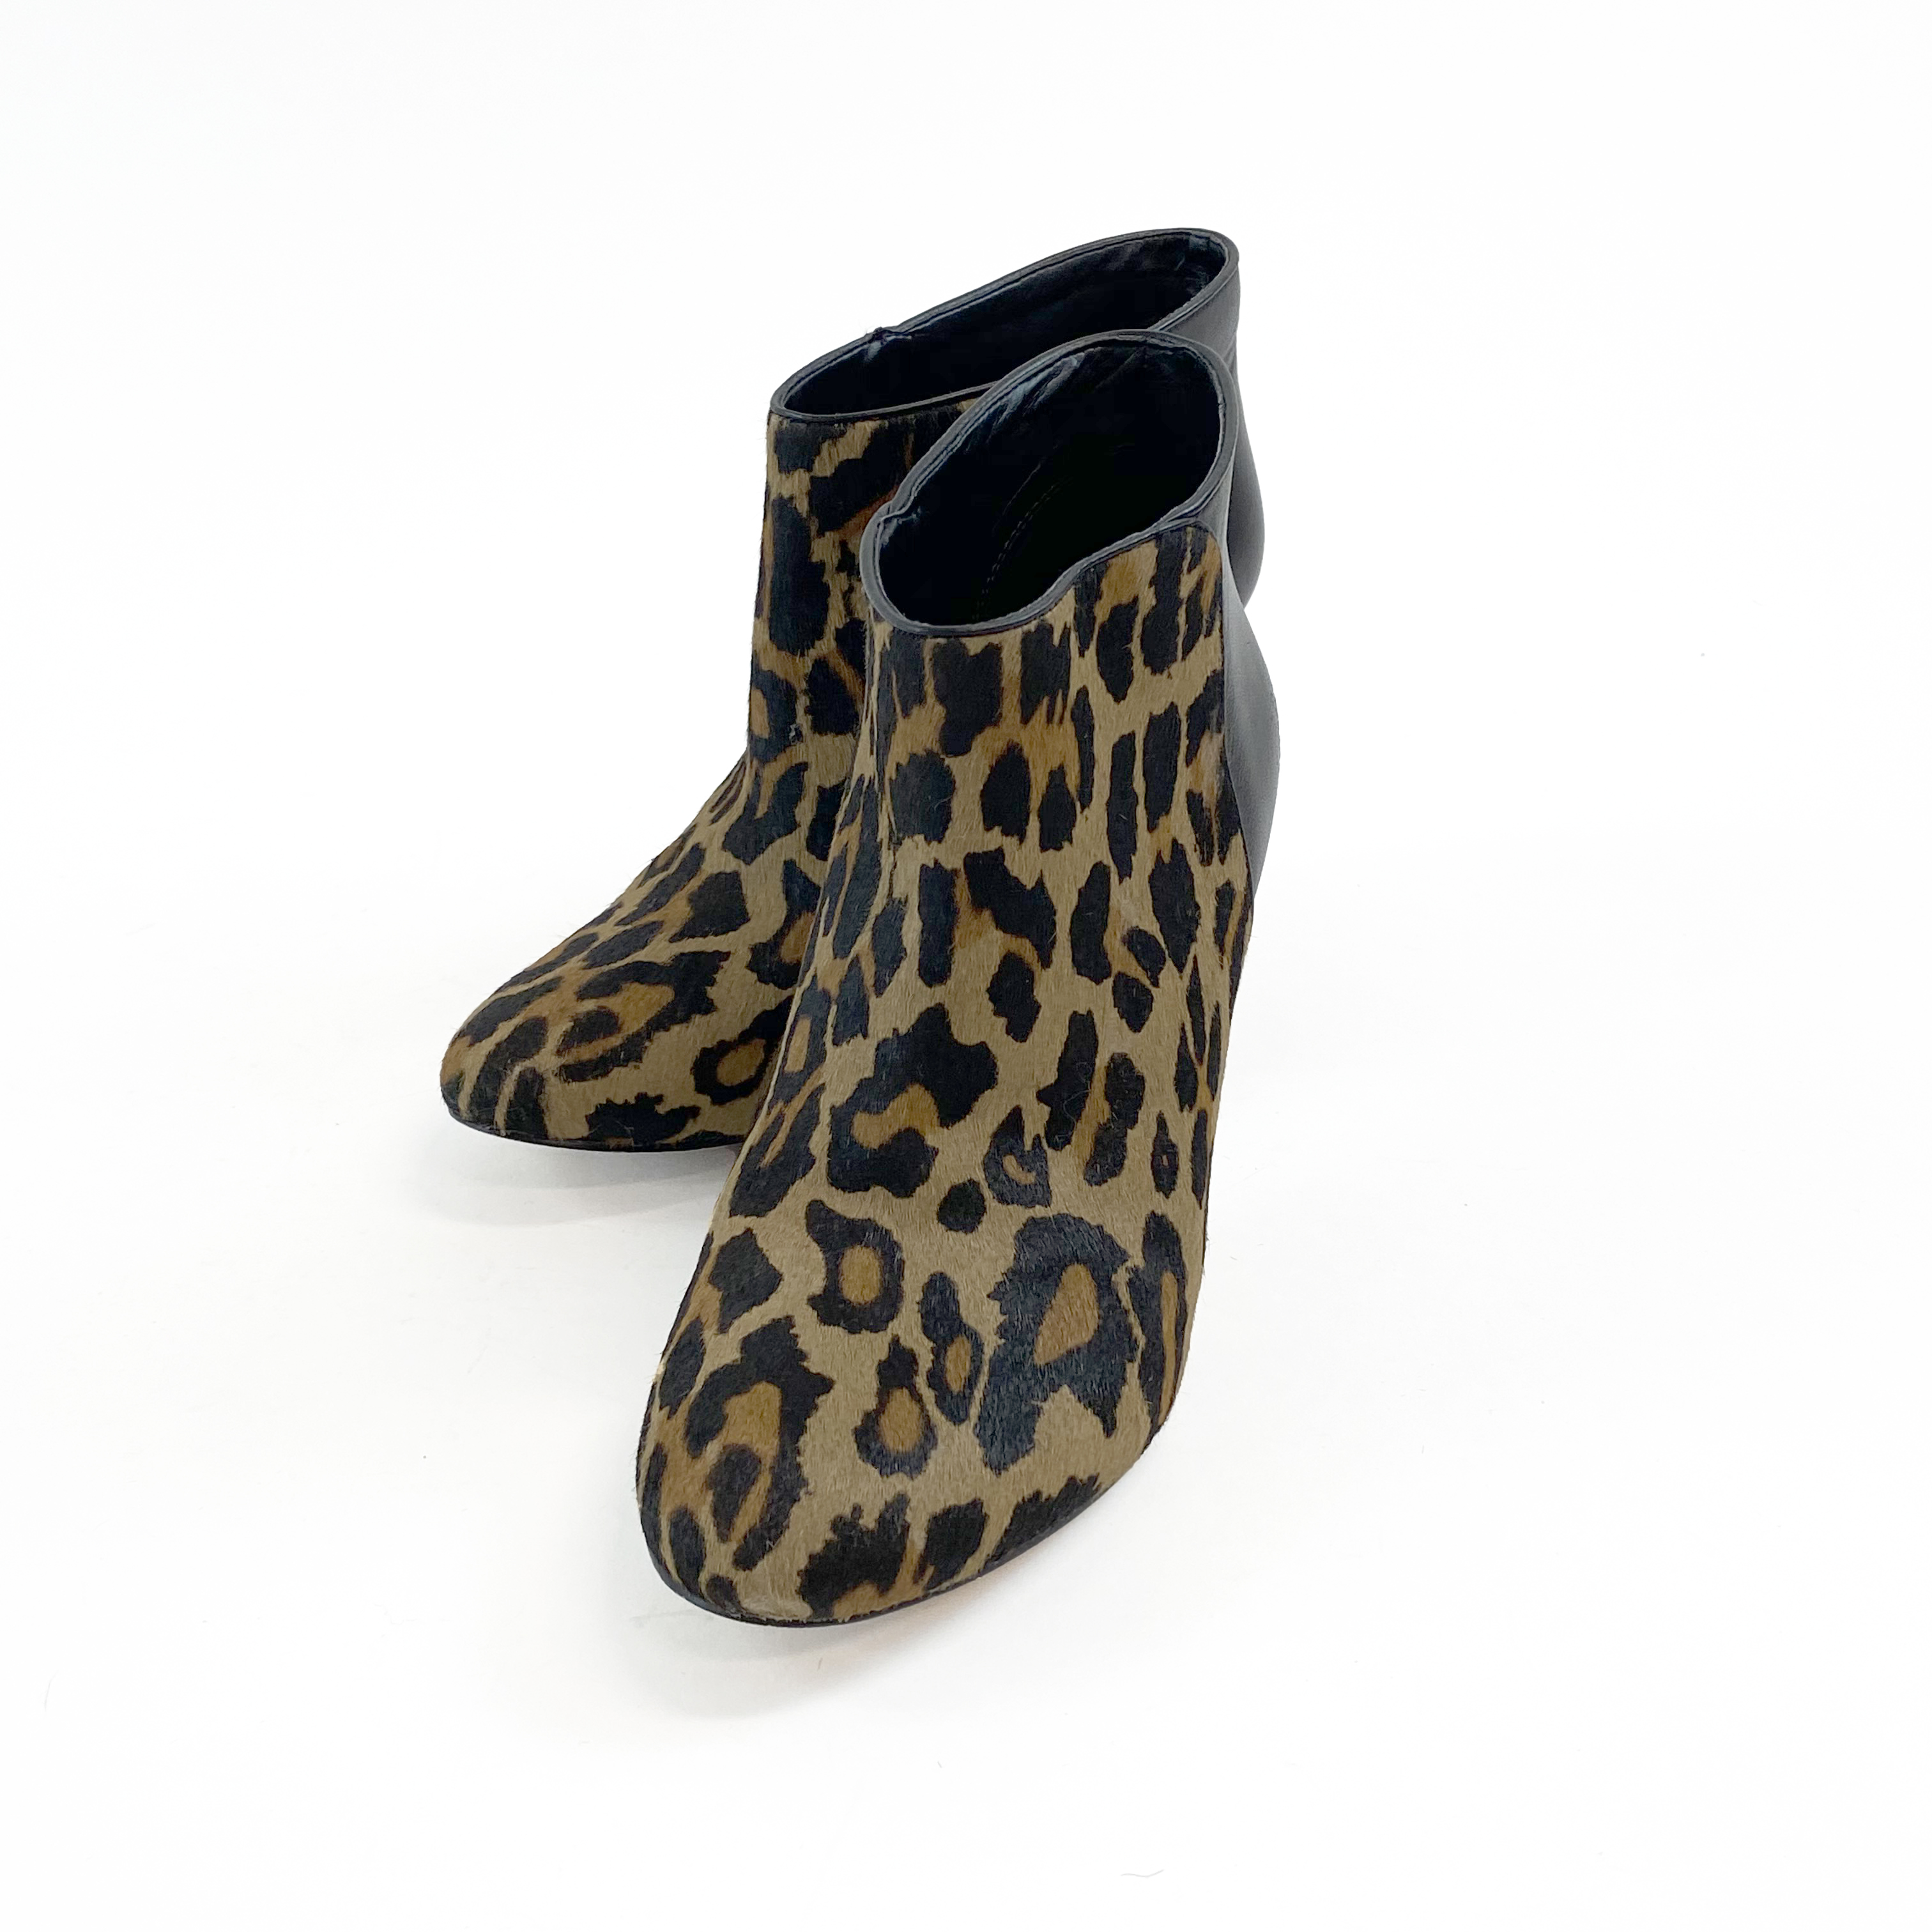 Ninewest Leopard-print Stiletto-heel Ankle Boot